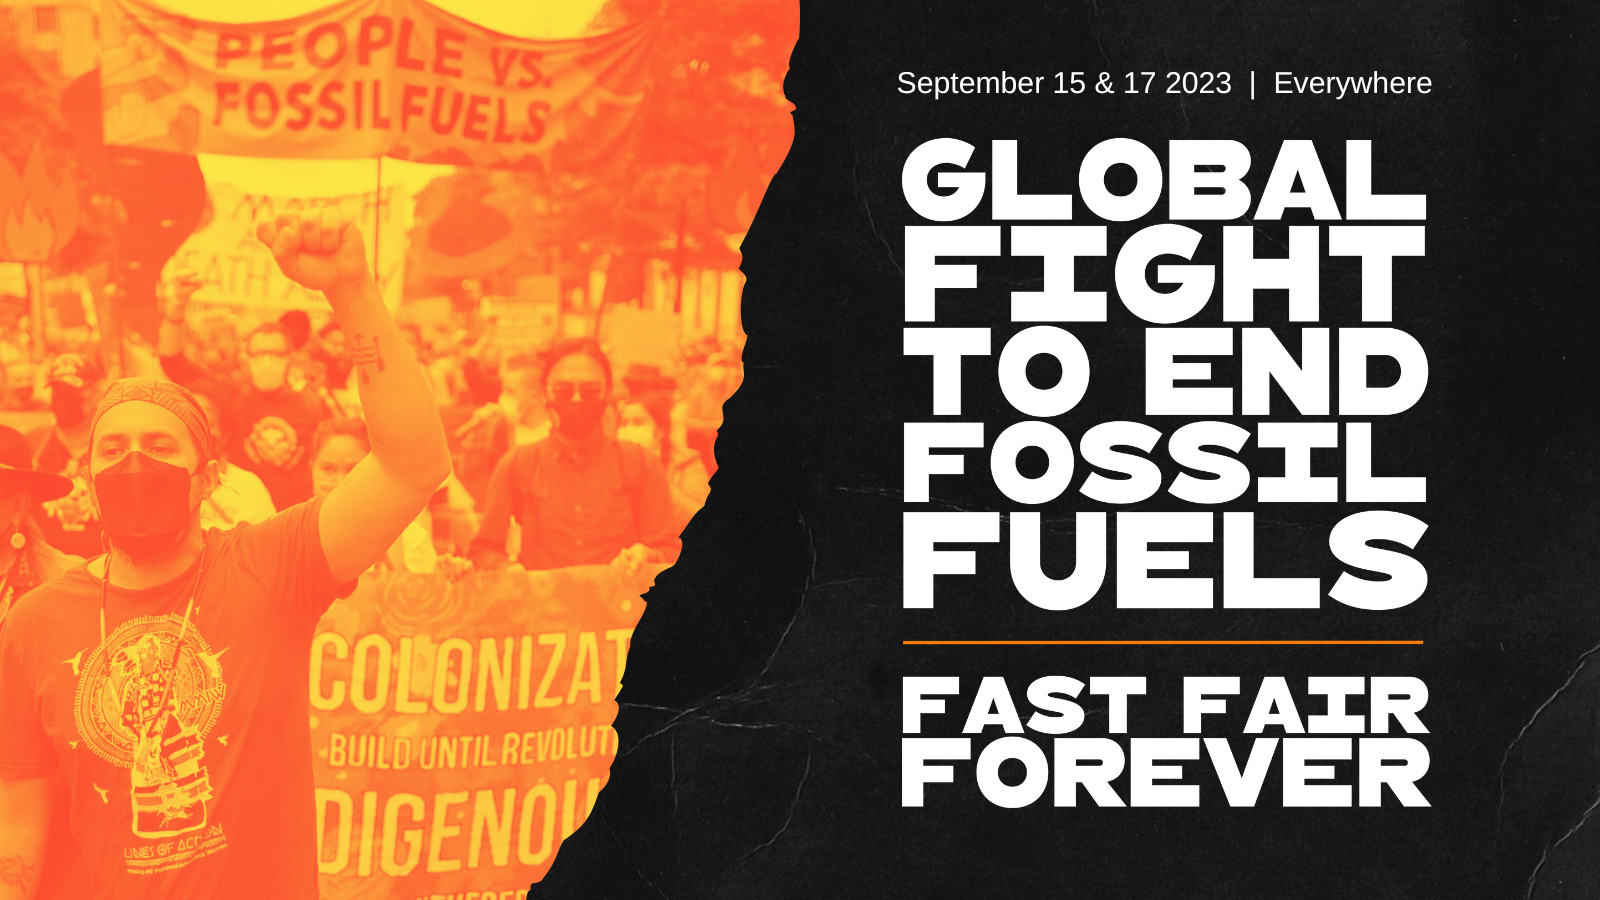 GLOBAL STRIKE FRIDAY, SEPTEMBER 15 #ENDFOSSILFUELS #FAIRFASTFOREVER